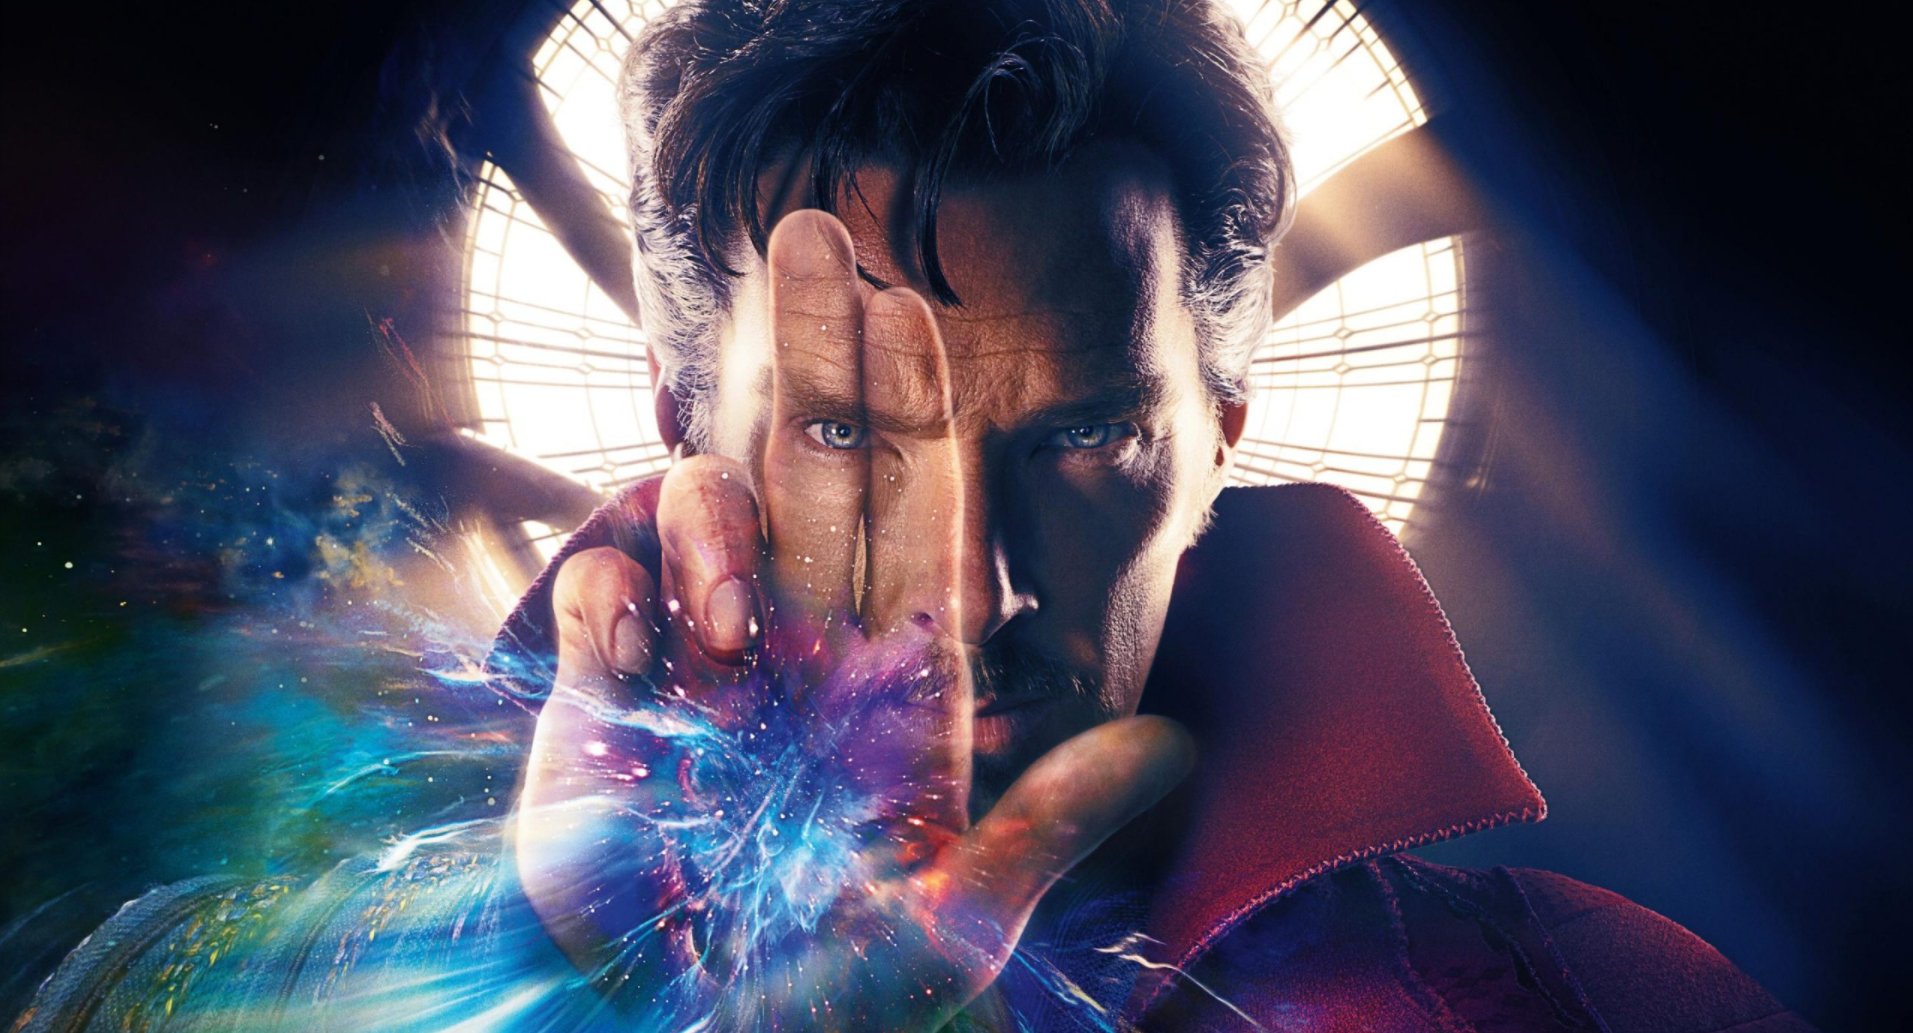 Dr srange - Doctor Strange in the Multiverse of Madness: Trailer, Release Date, Cast, Plot